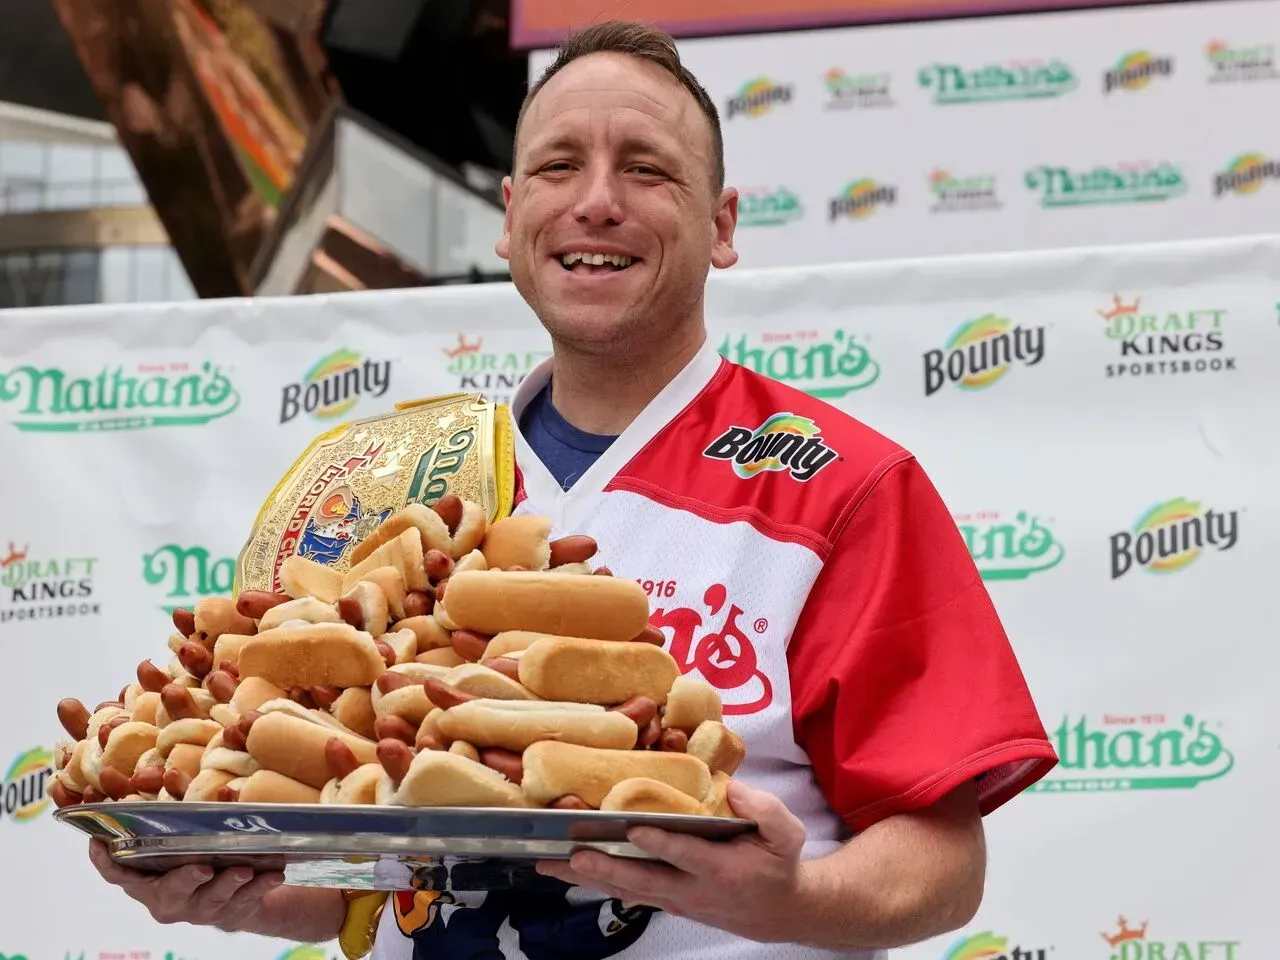 
											
											Amerikalik erkak 58 ta hot-dog yeb, rekord o‘rnatdi
											
											